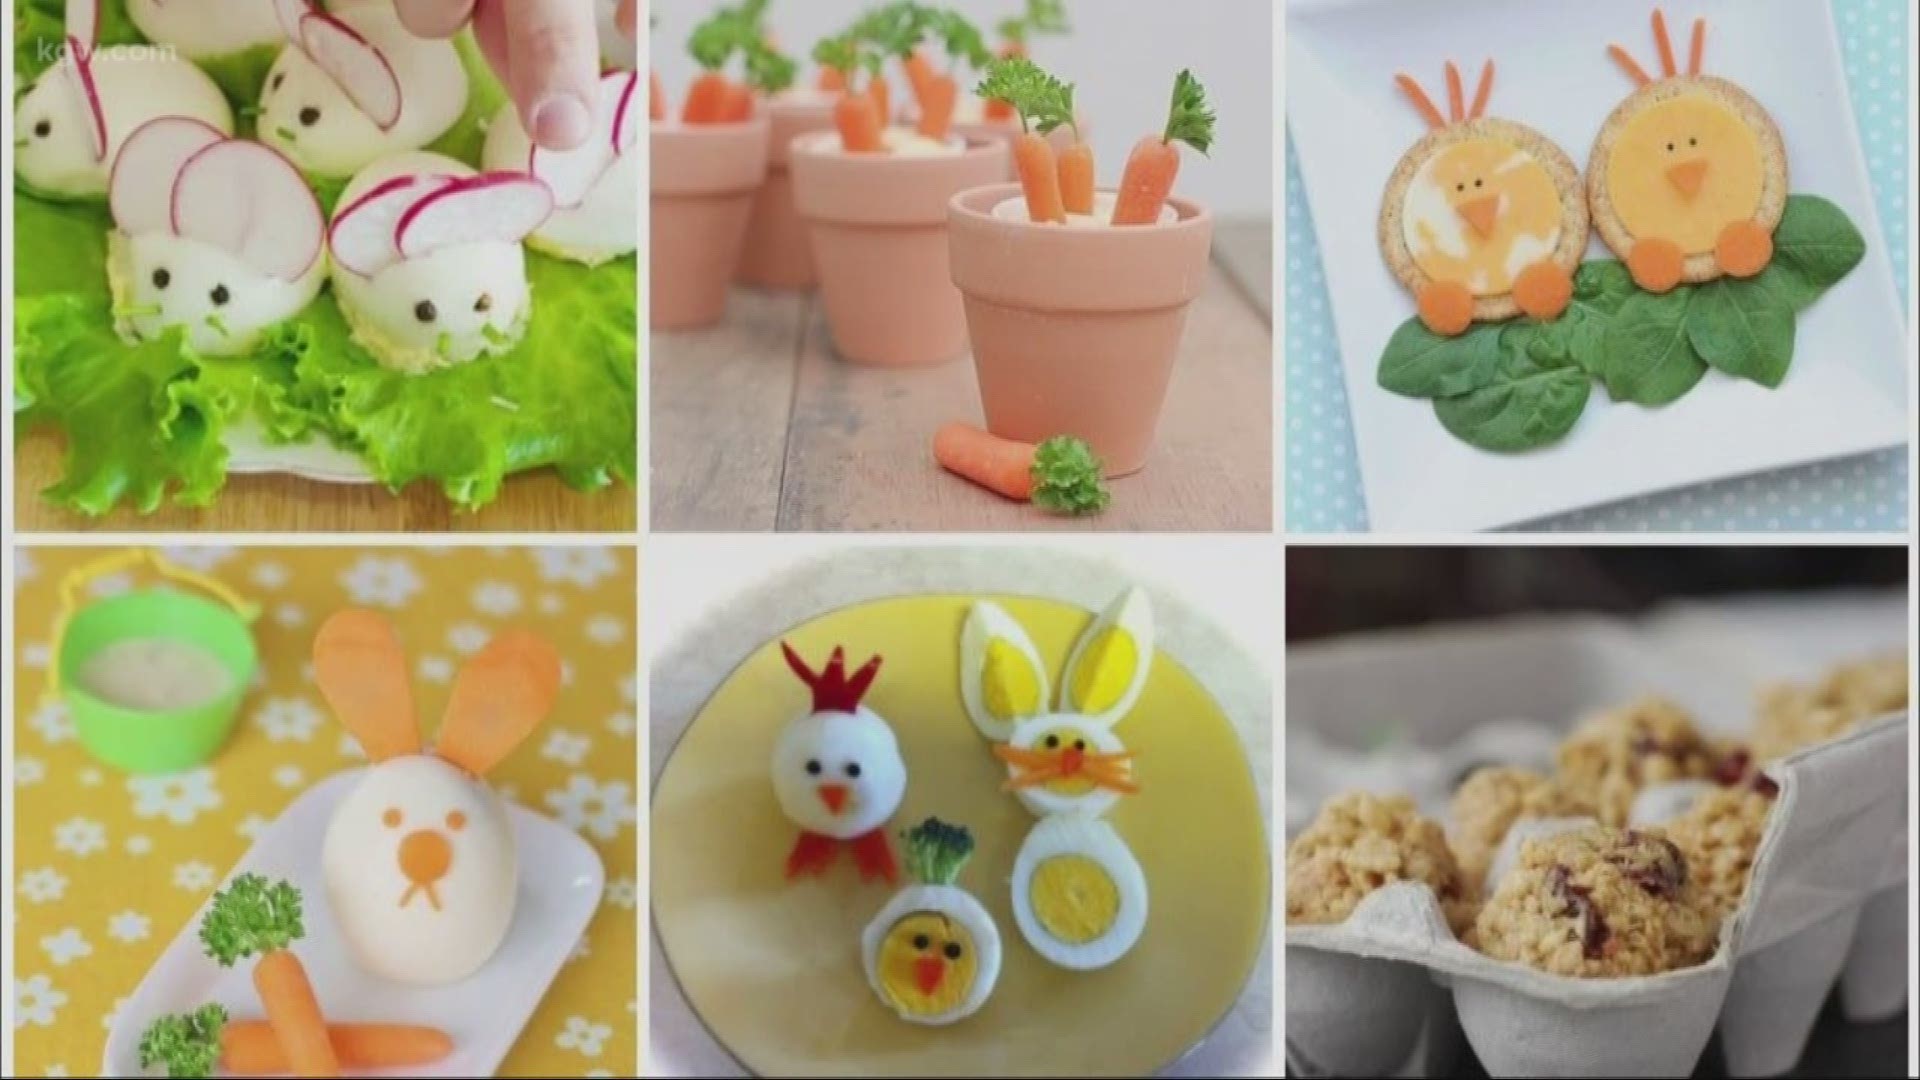 Irene Franklin creates snacks with hummus, cucumber, carrots, eggs and avocado